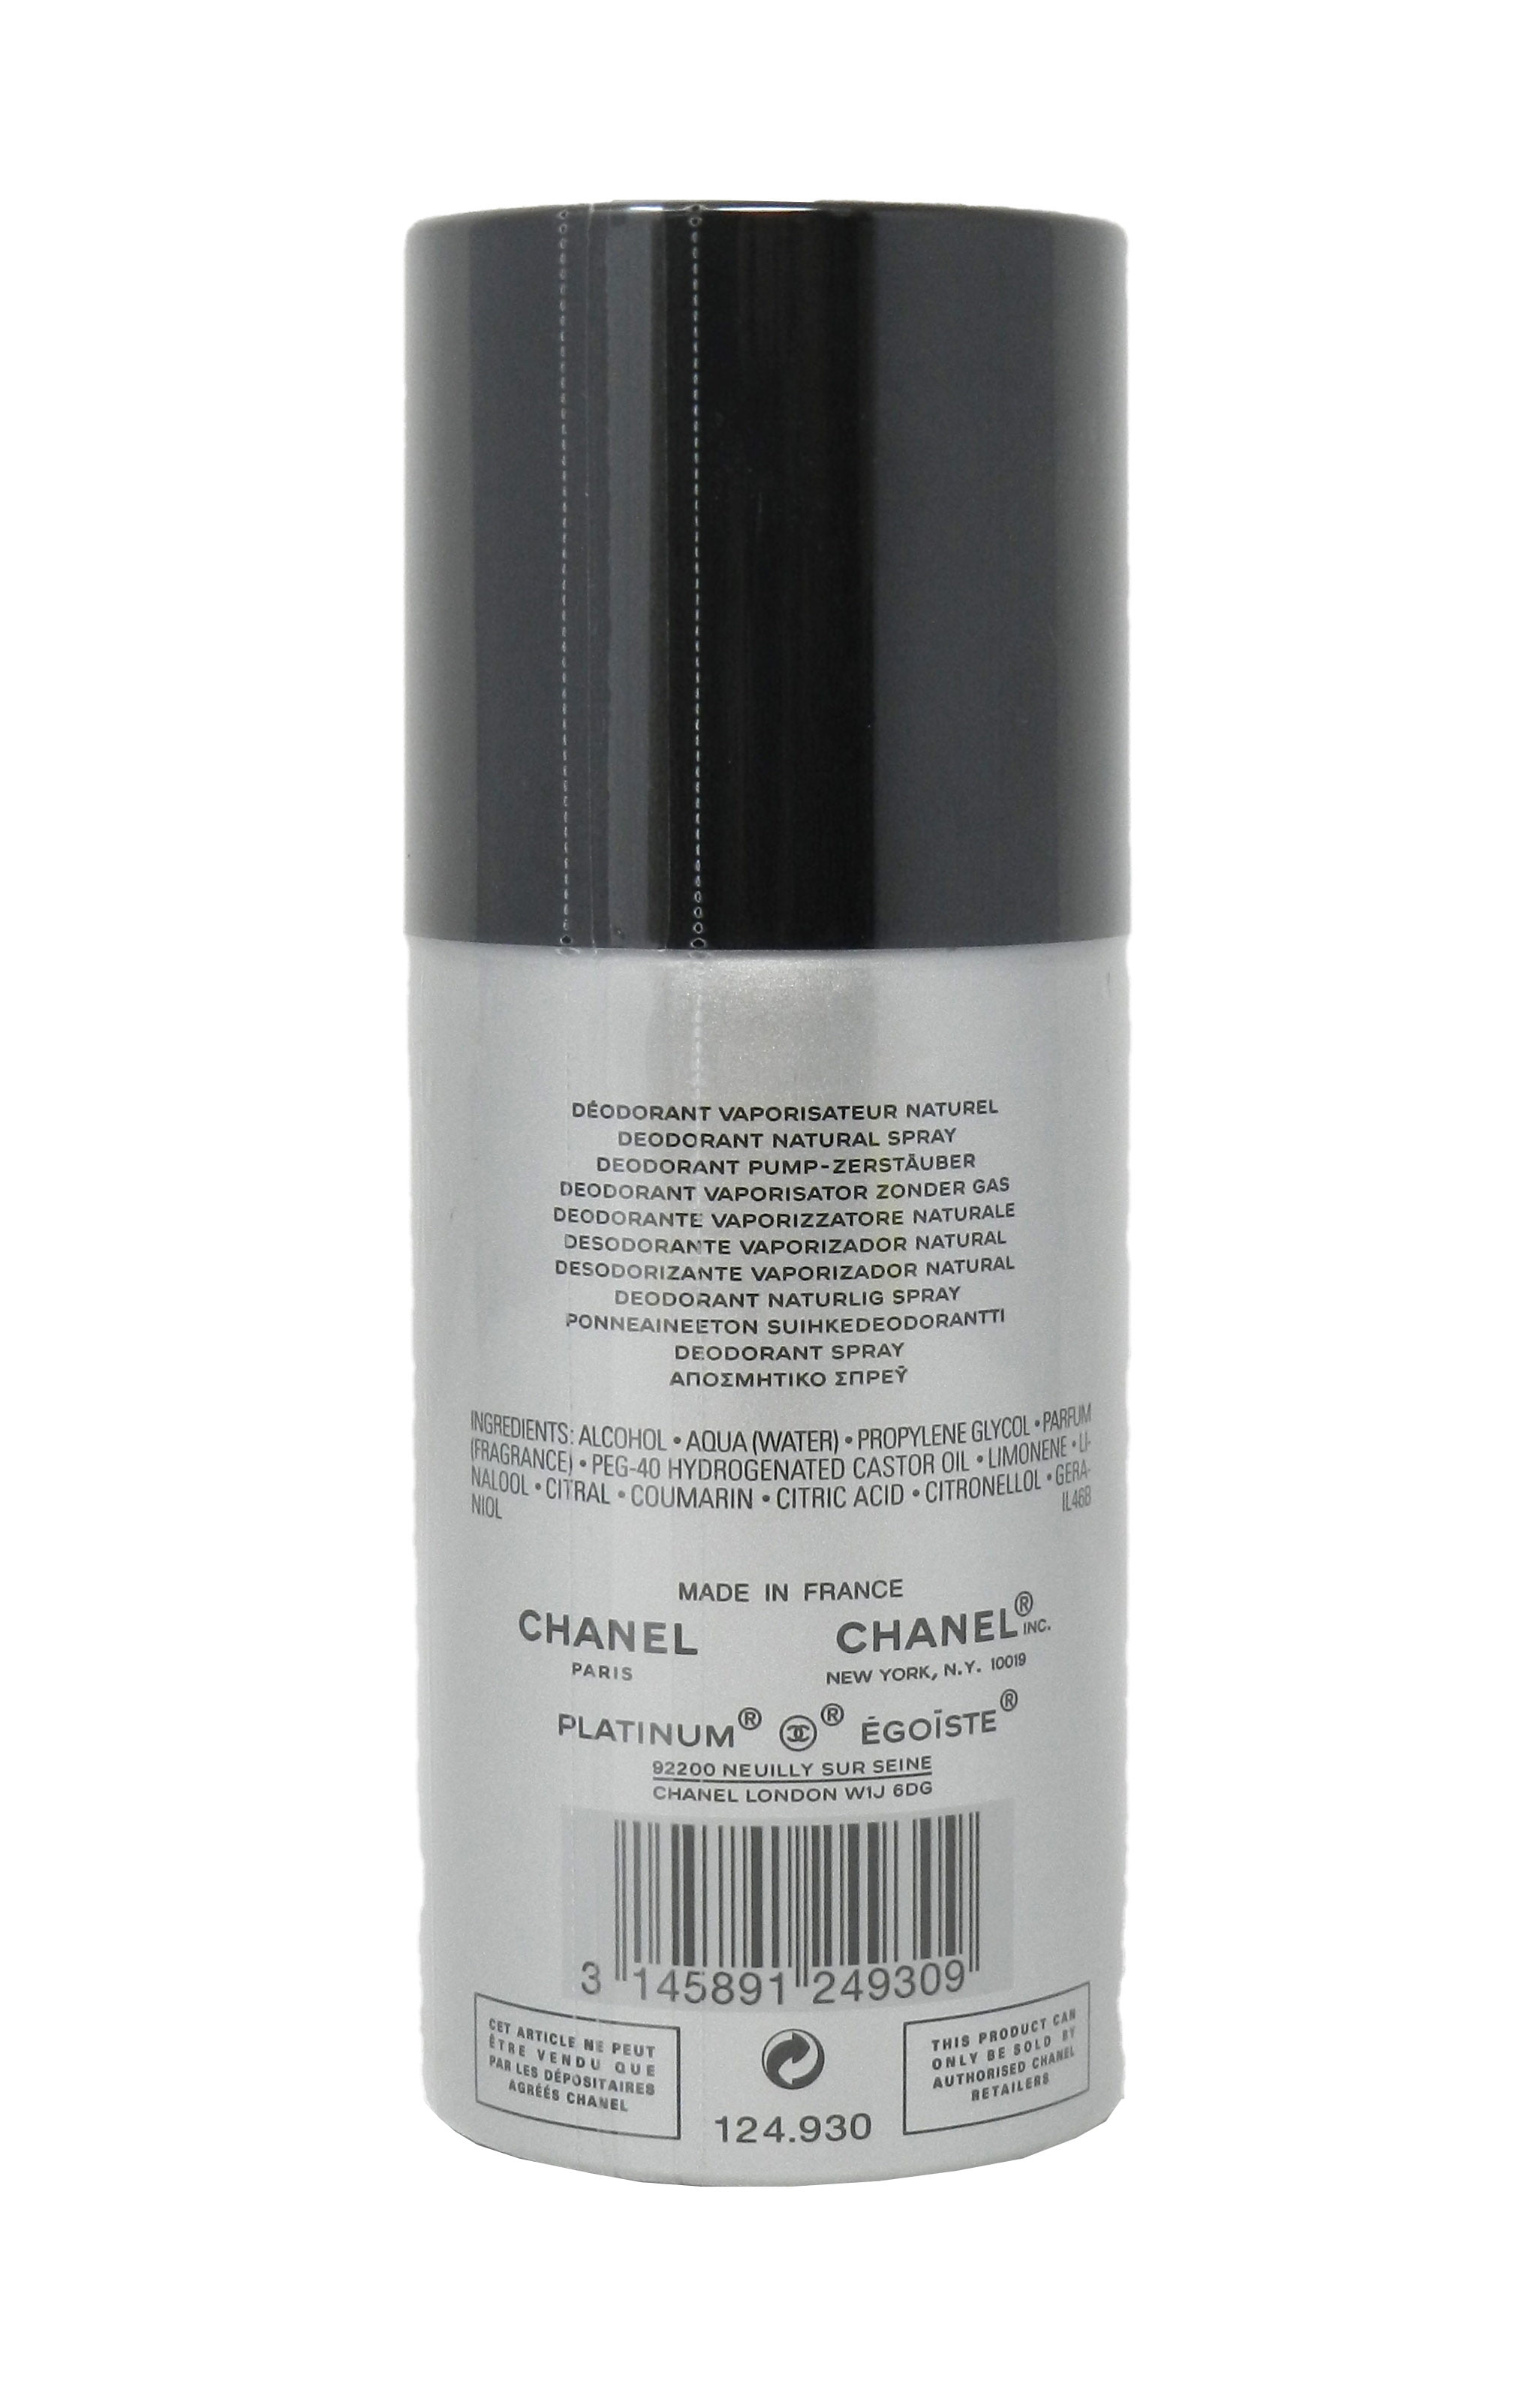 Egoiste Platinum By Chanel For Men Deodorant Stick 2 Oz